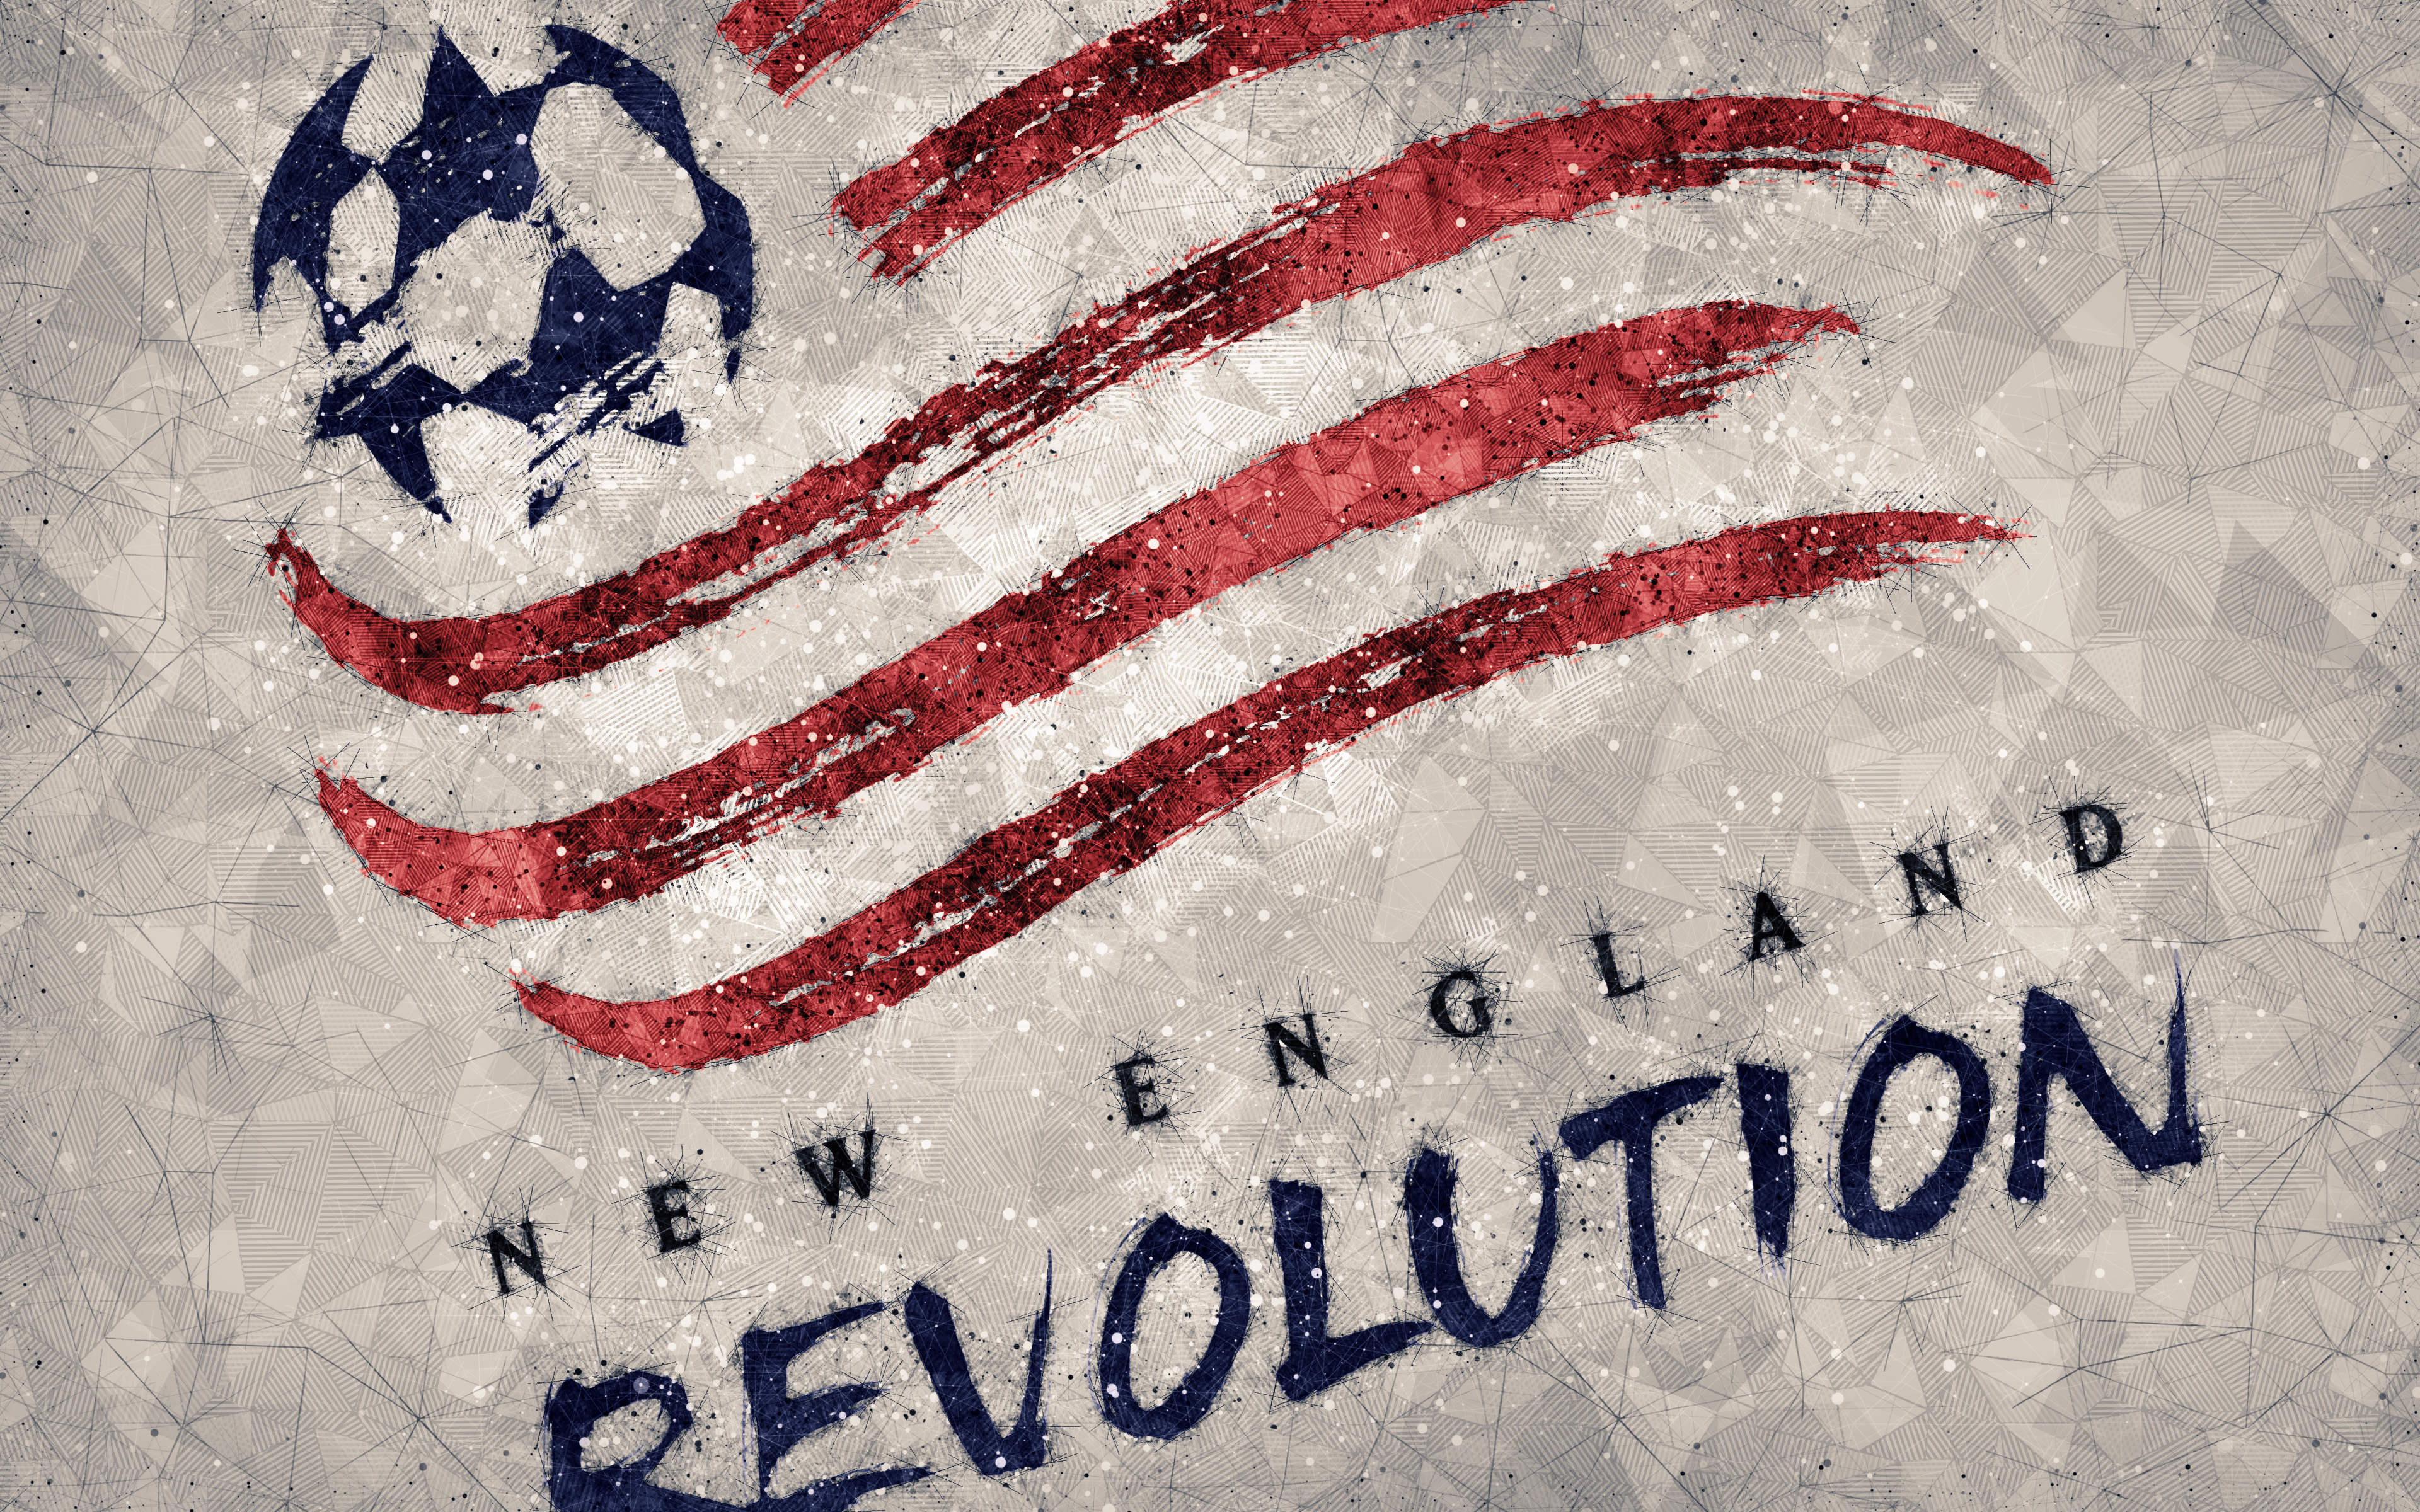 Sports New England Revolution 4k Ultra HD Wallpaper